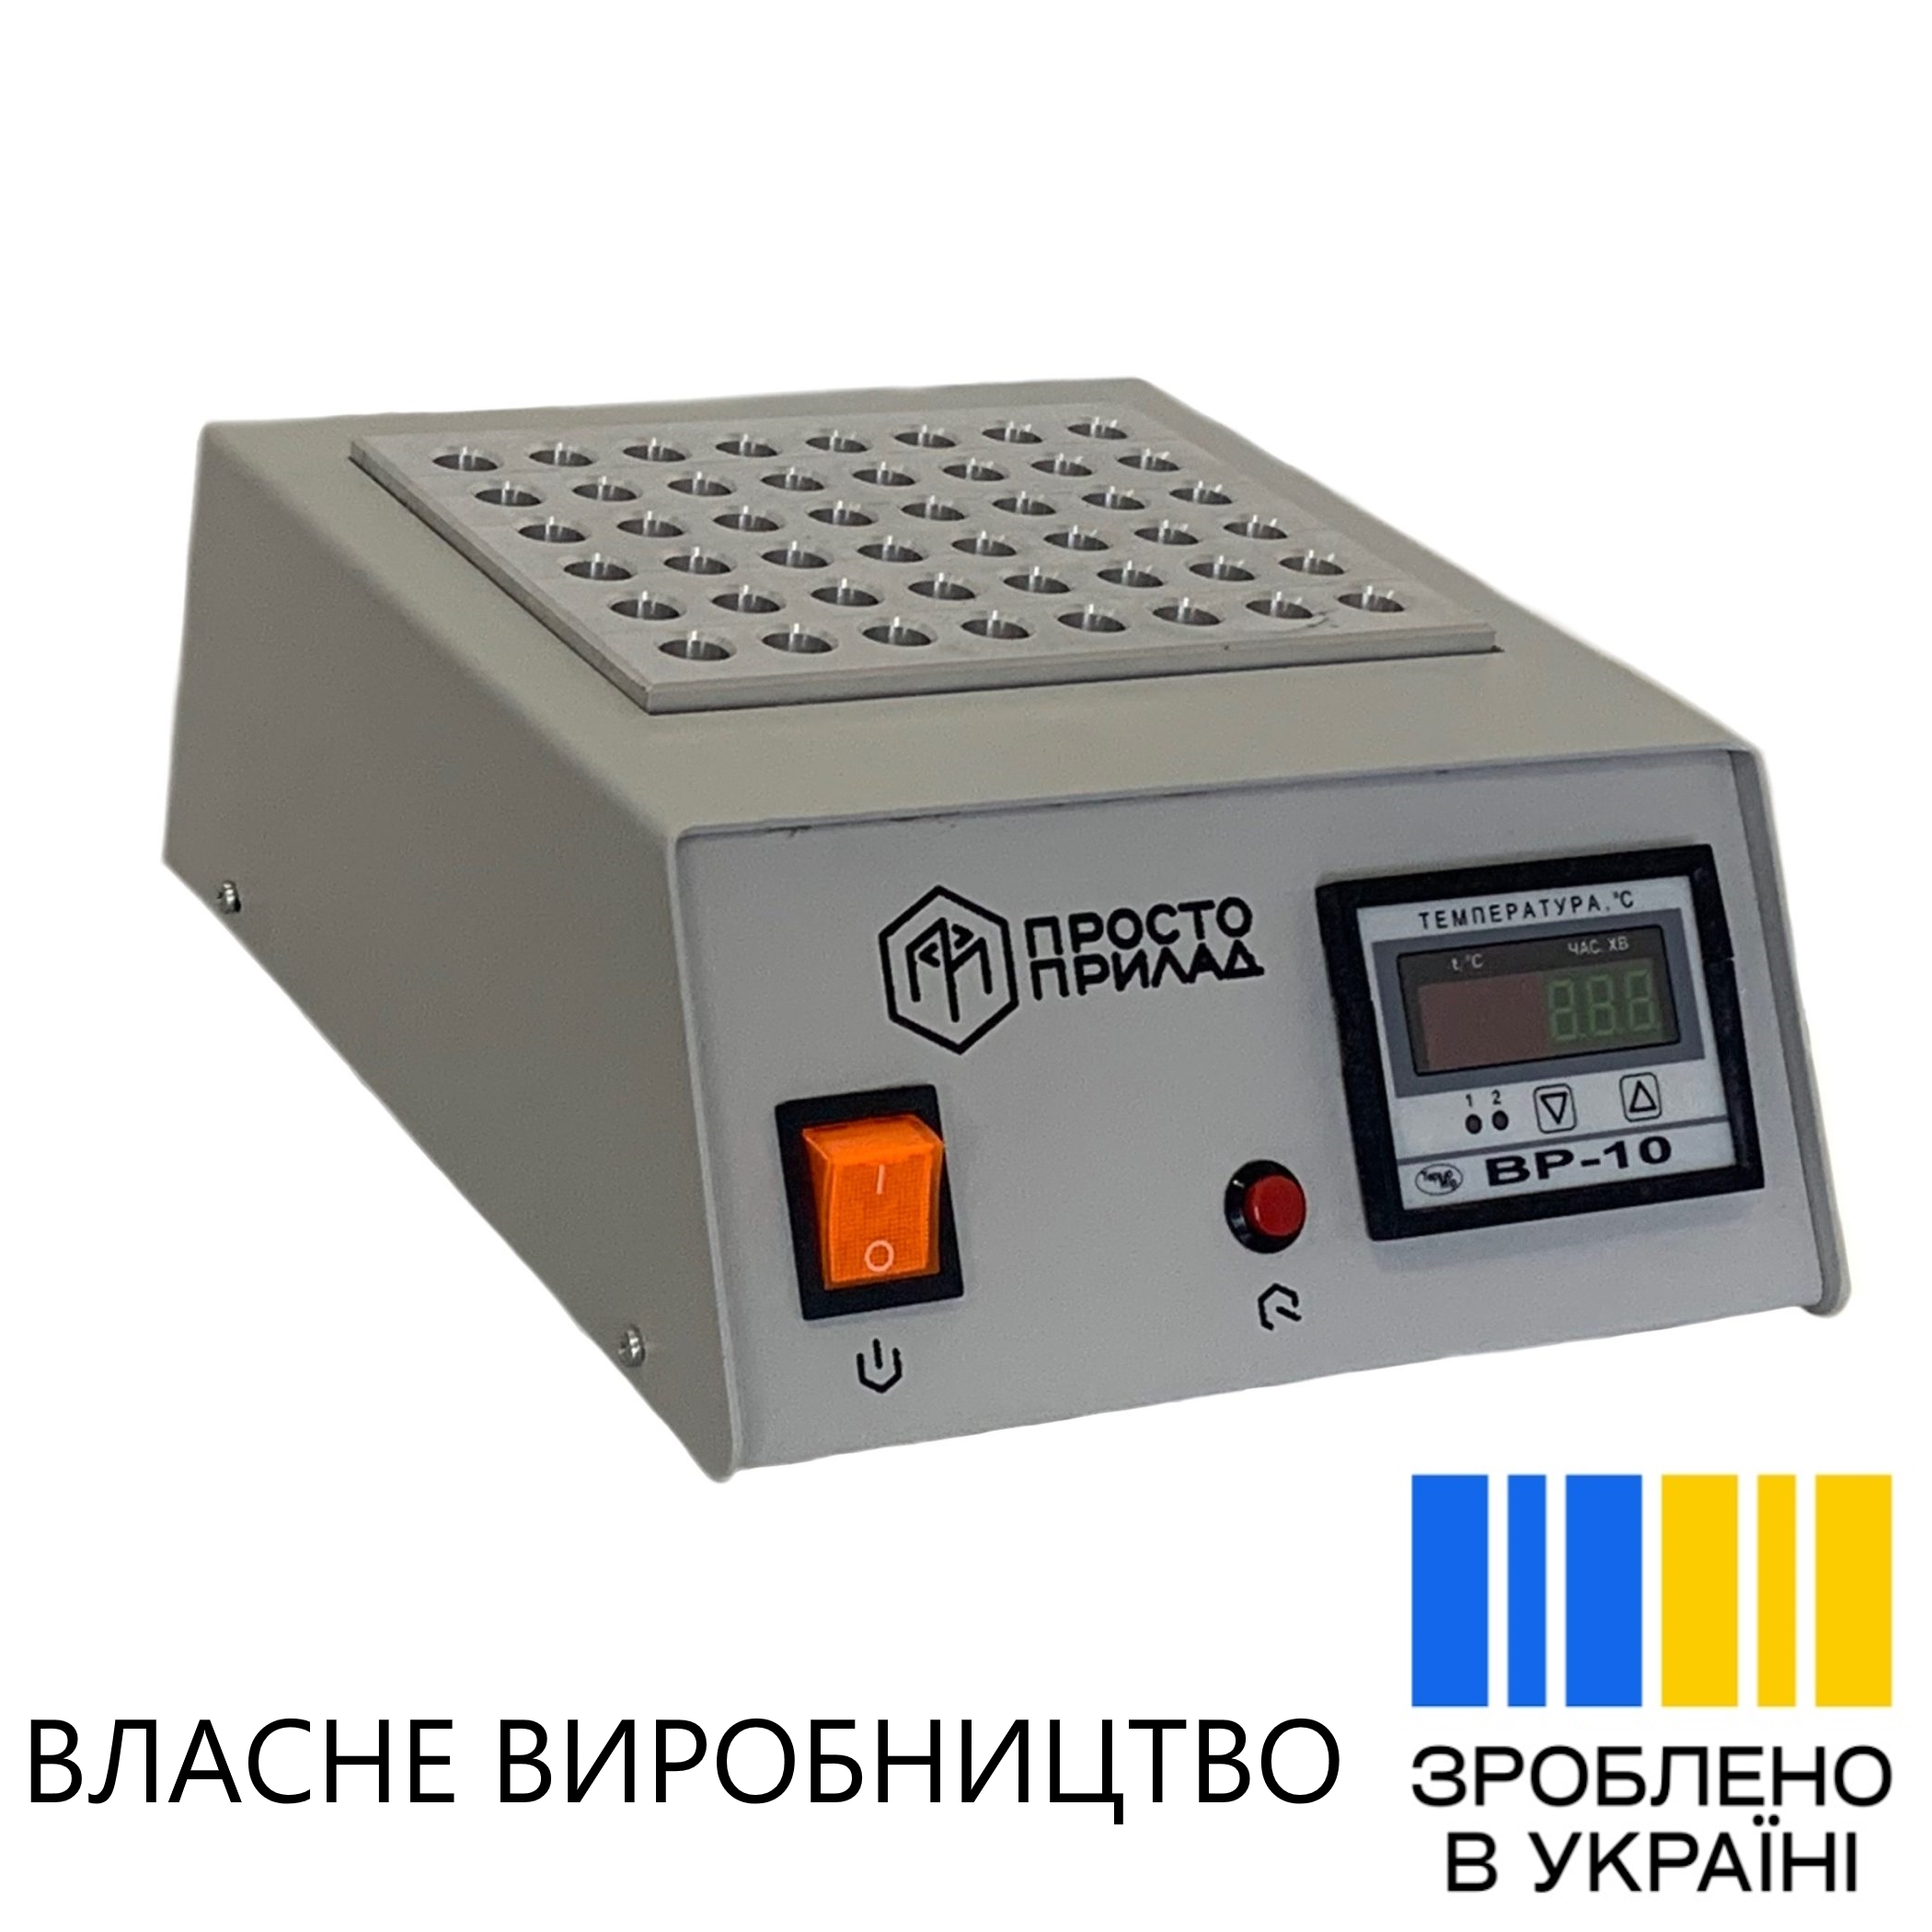 Термостат для микропробирок типа Эппендорф ПП ВР-10